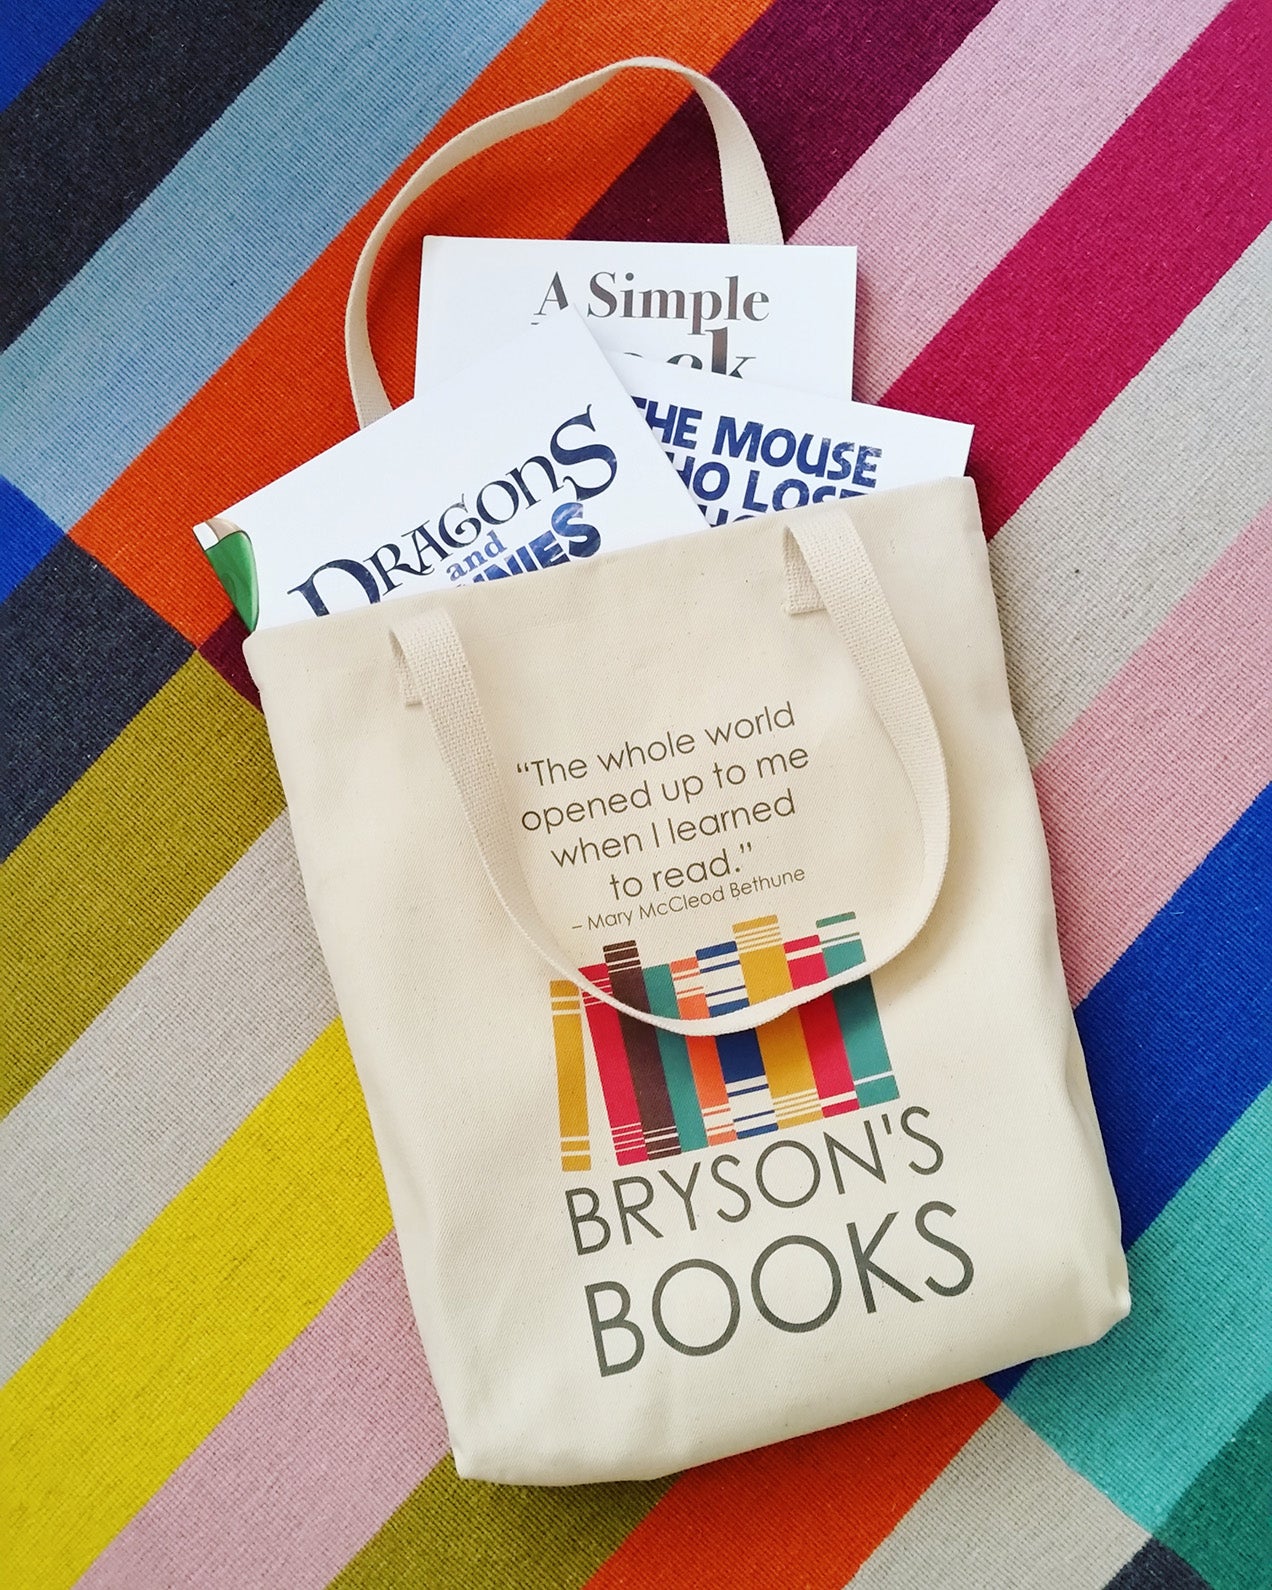 Bryson's Books bag image stripes